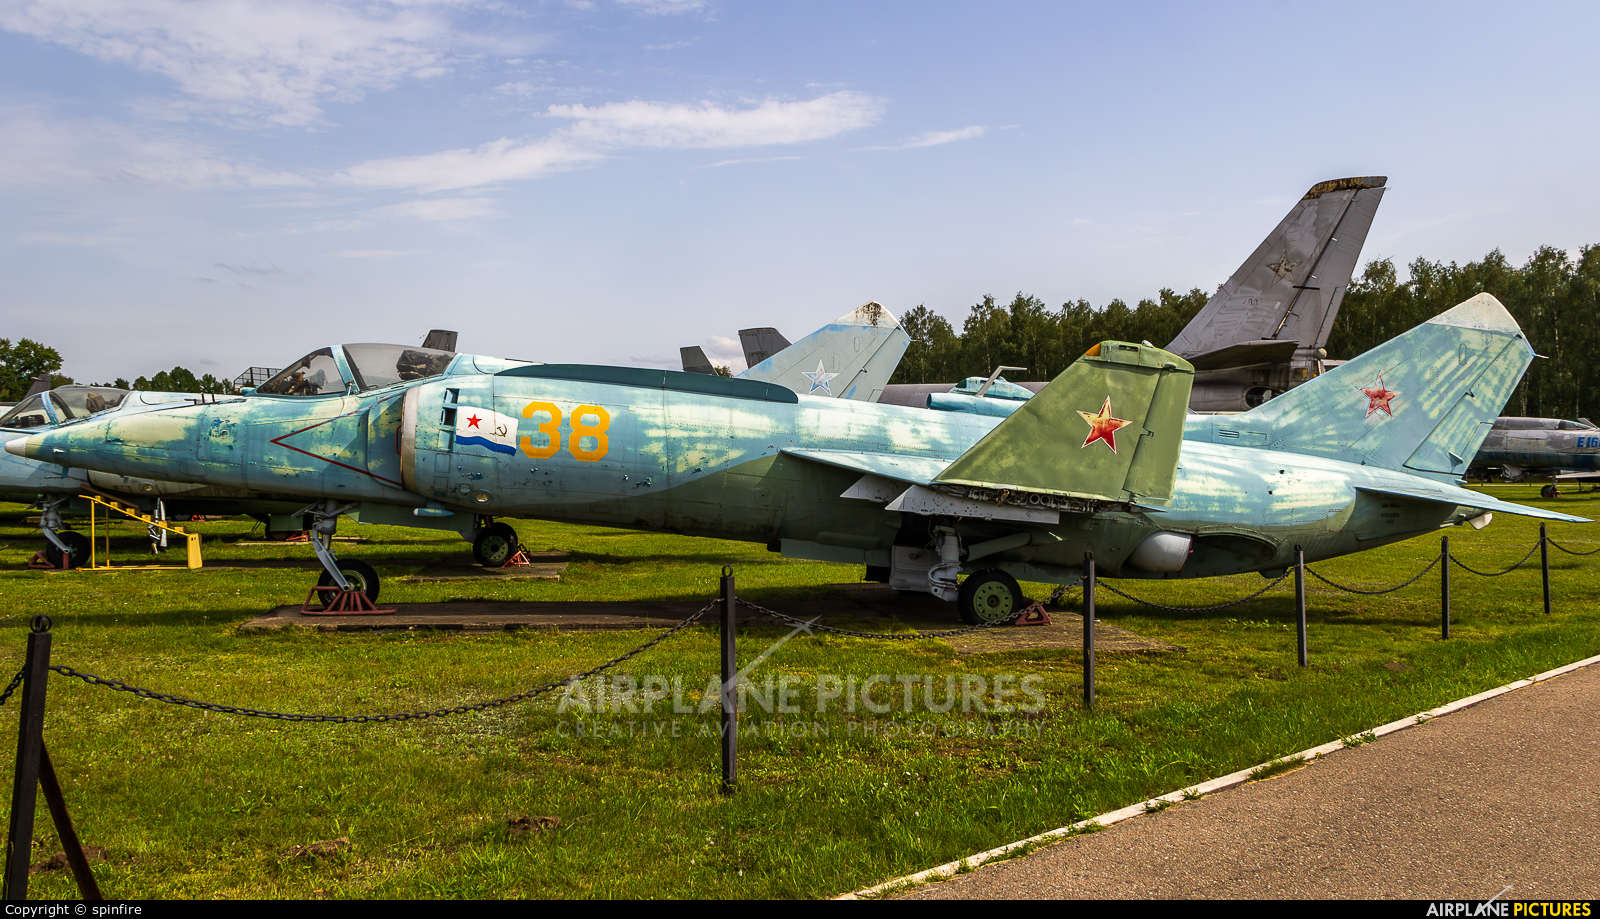 Yakovlev Design Bureau 38 aircraft at Monino Russian Air Force museum